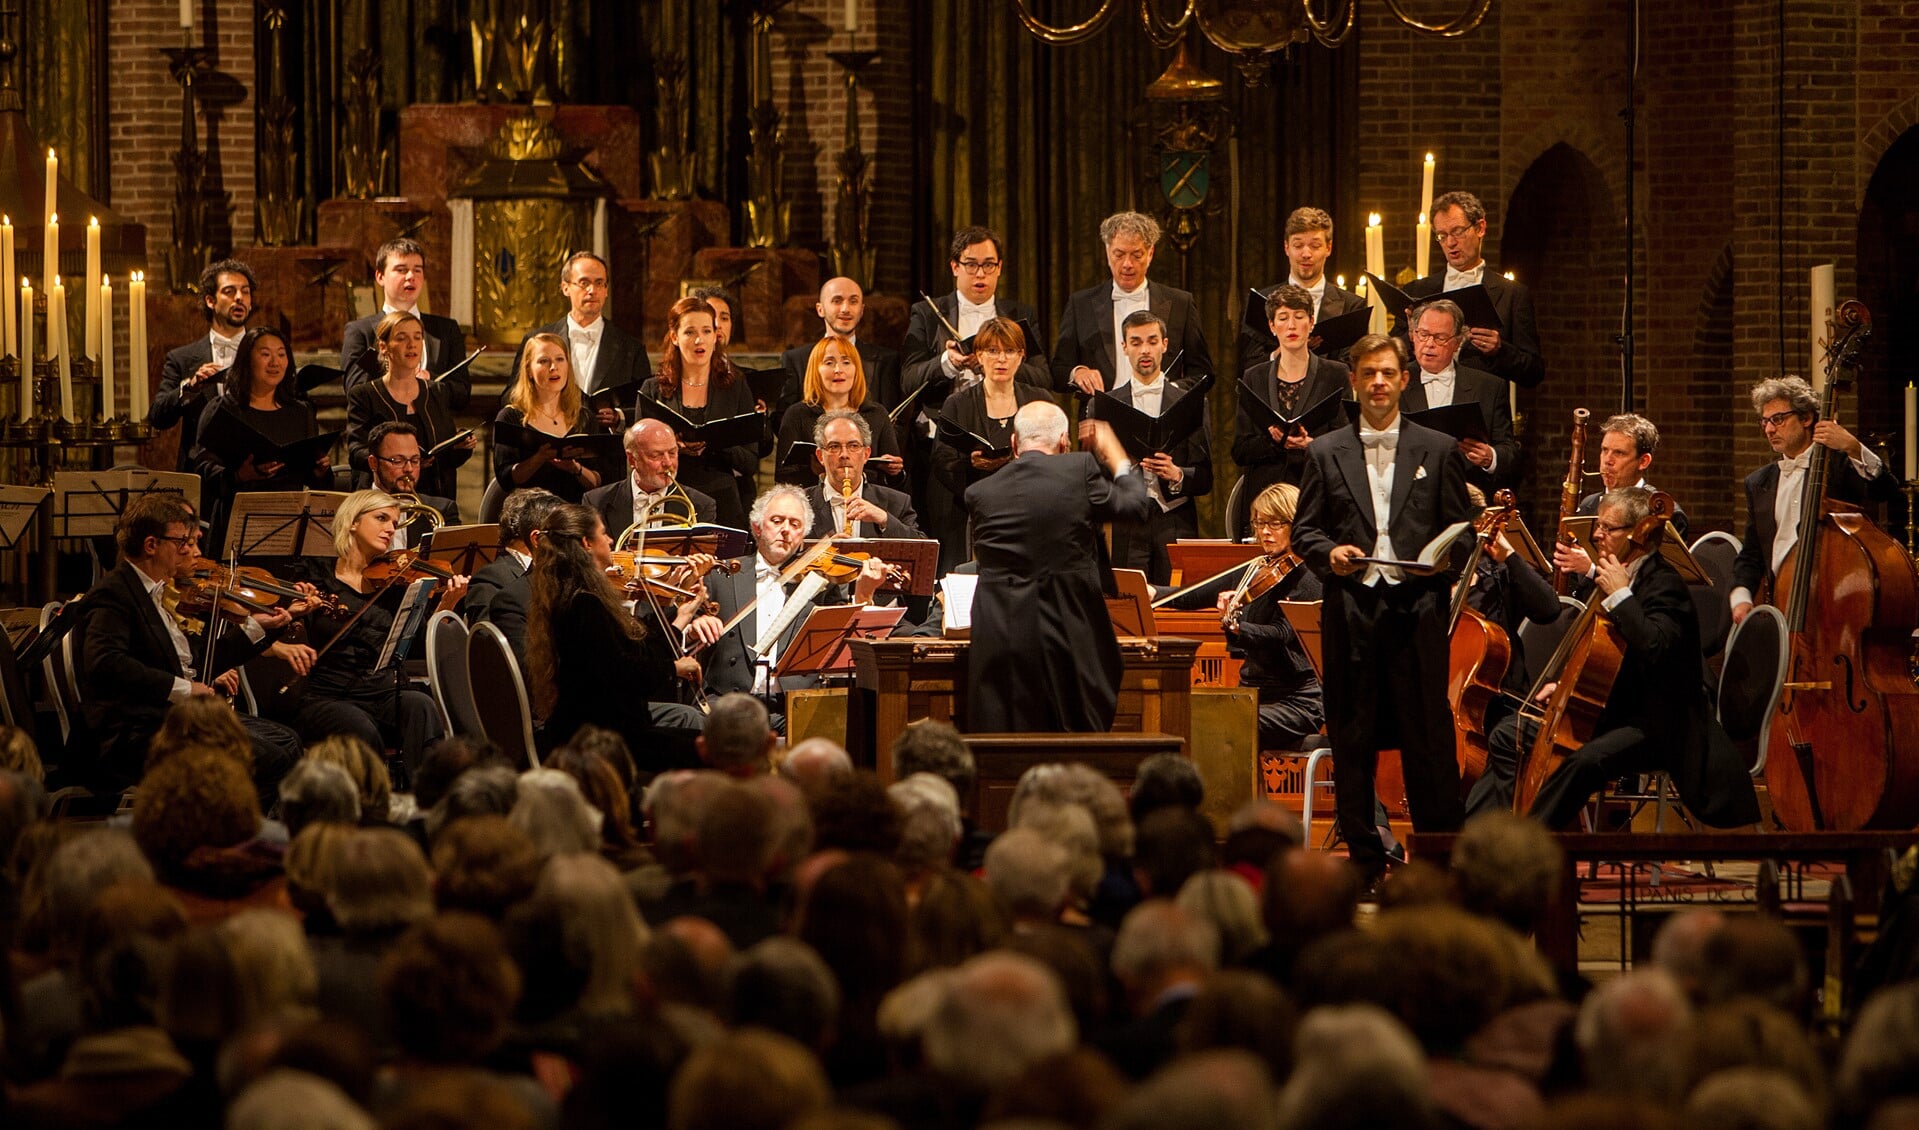 Het Amsterdam Baroque Orchestra en Choir onder leiding van Ton Koopmans. Staand vooraan tenor Tilman Lichdi.